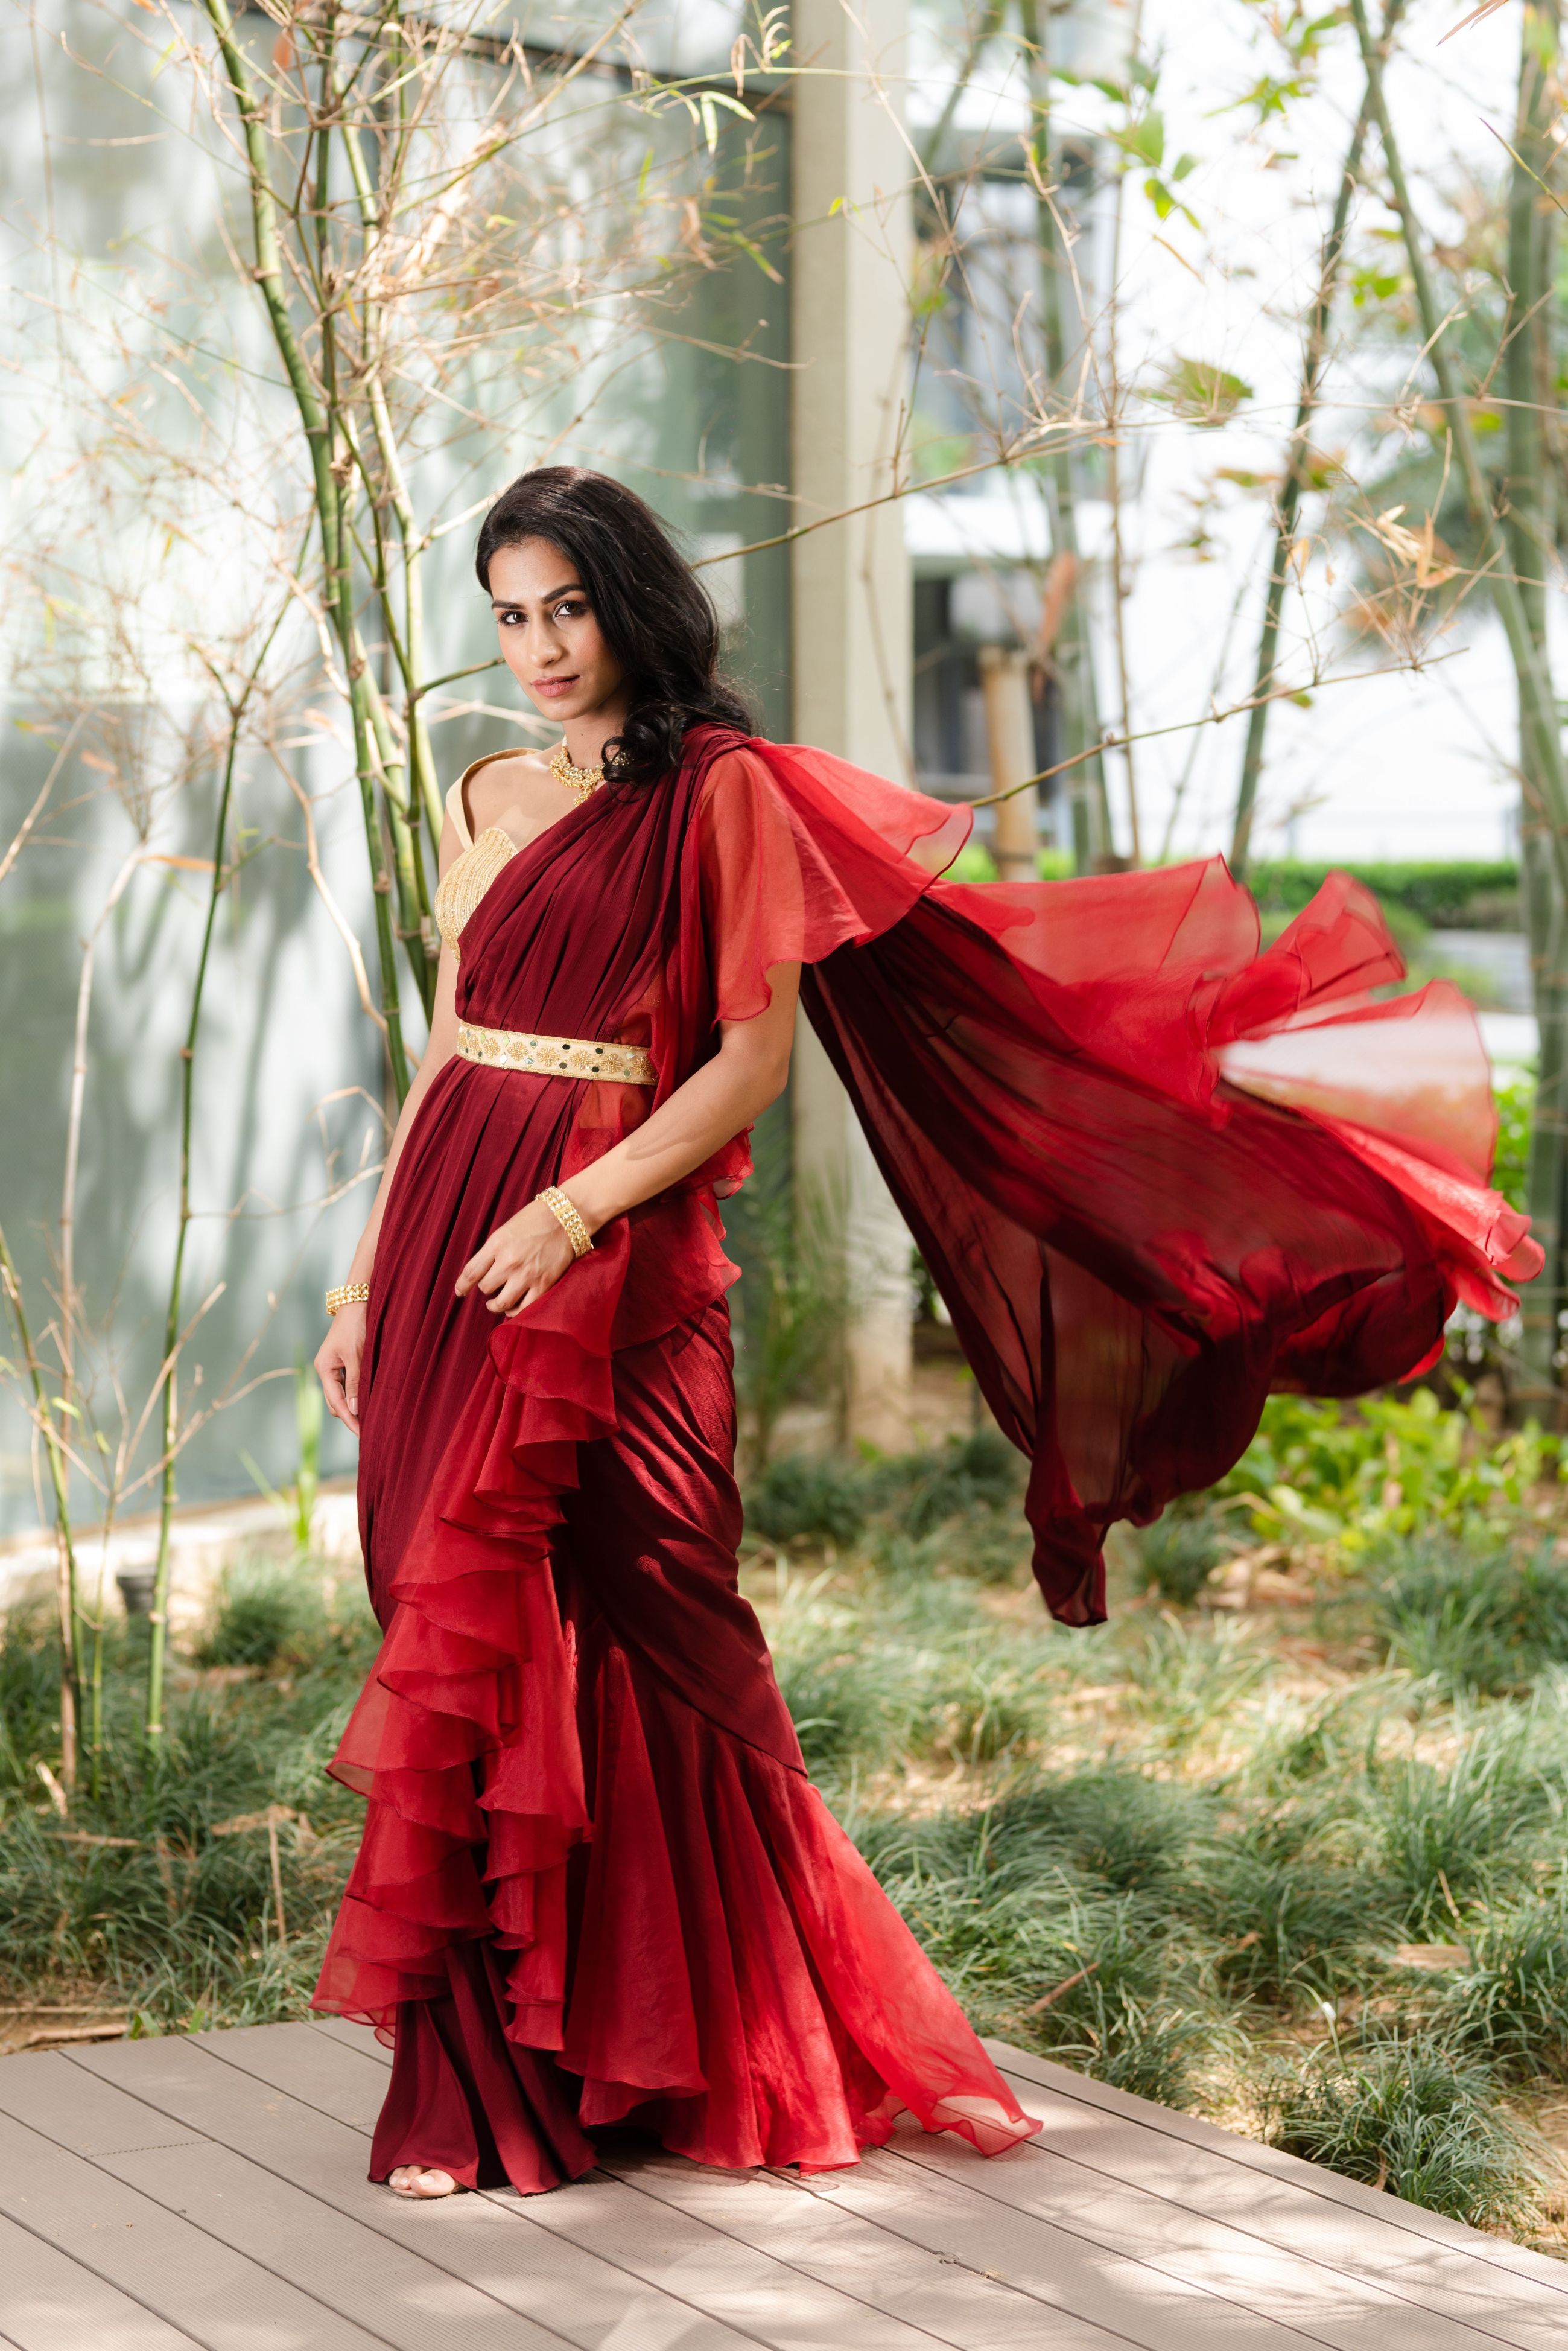 Off White Ruffle Lehenga Choli Lengha Wedding Bollywood Dress Sari Saree  Dress | eBay